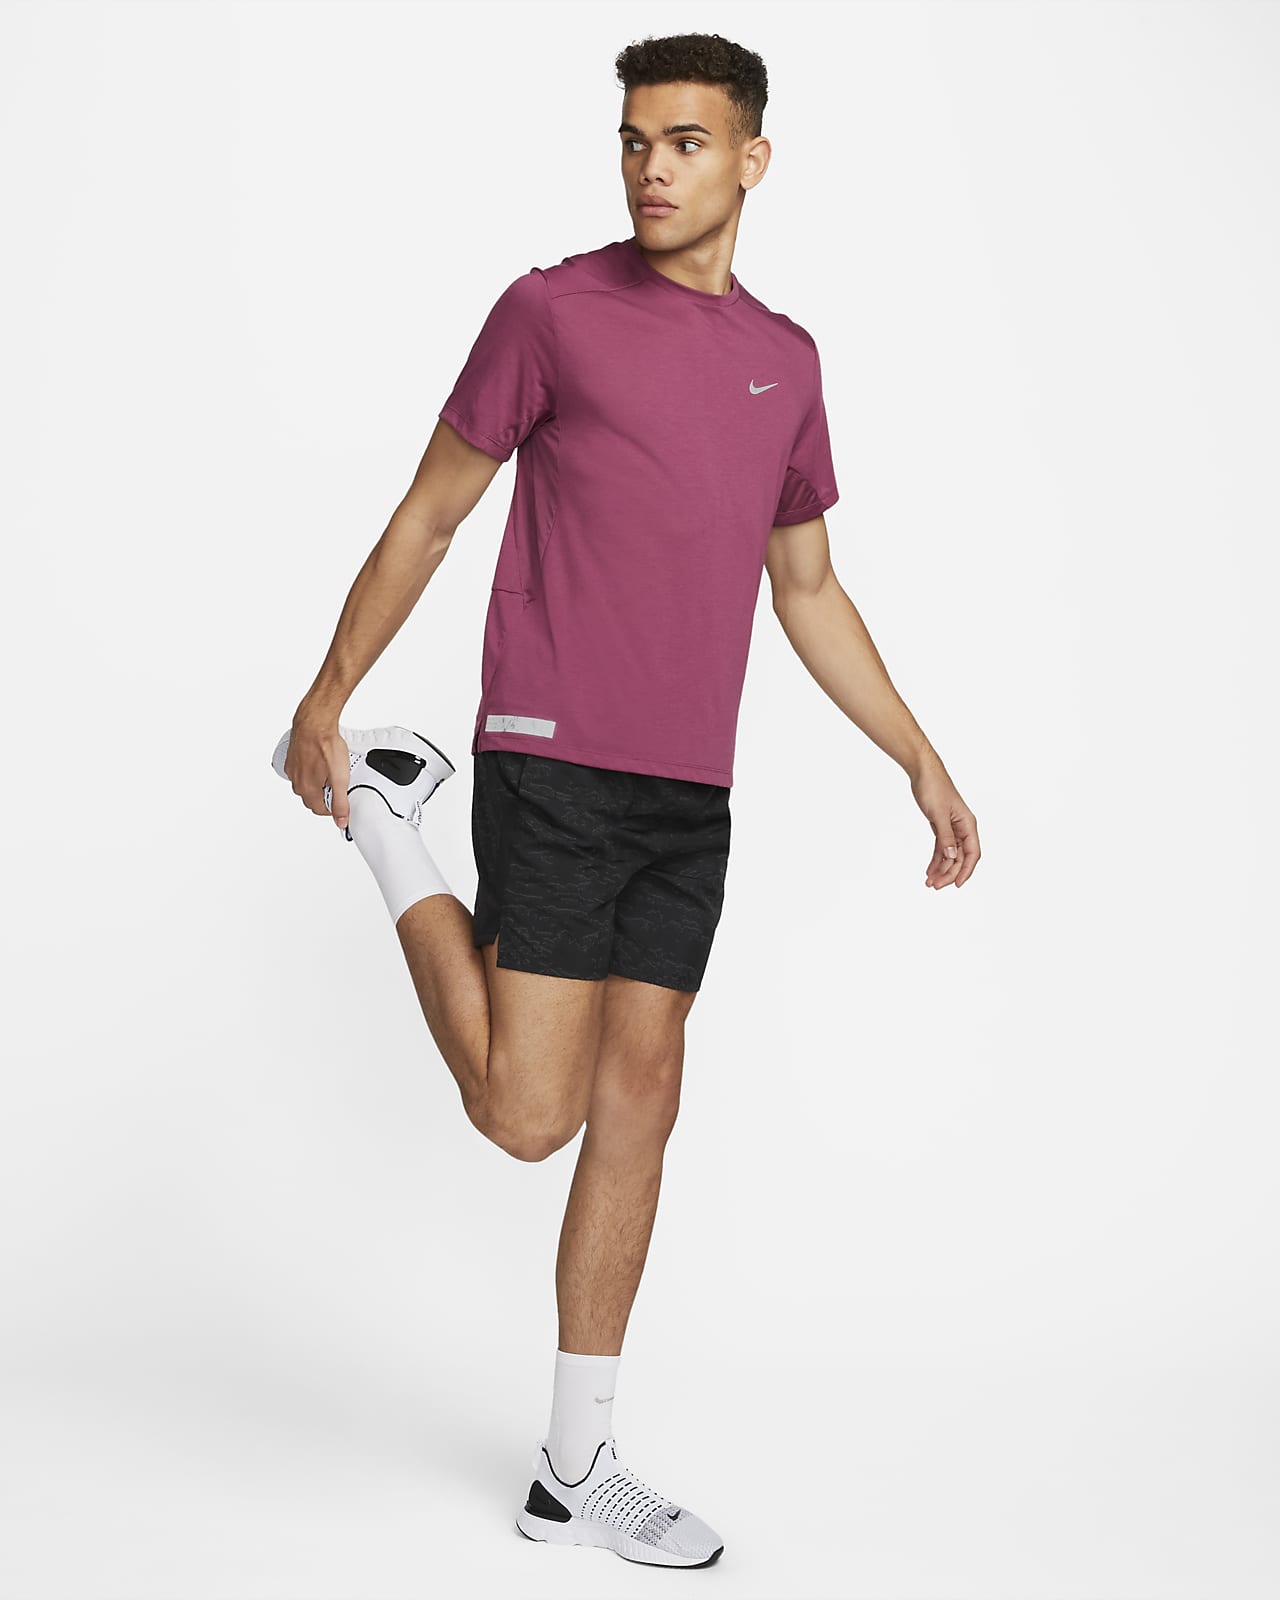 estaño Levántate versus Nike Dri-FIT Run Division Rise 365 Men's Short-Sleeve Running Top. Nike.com